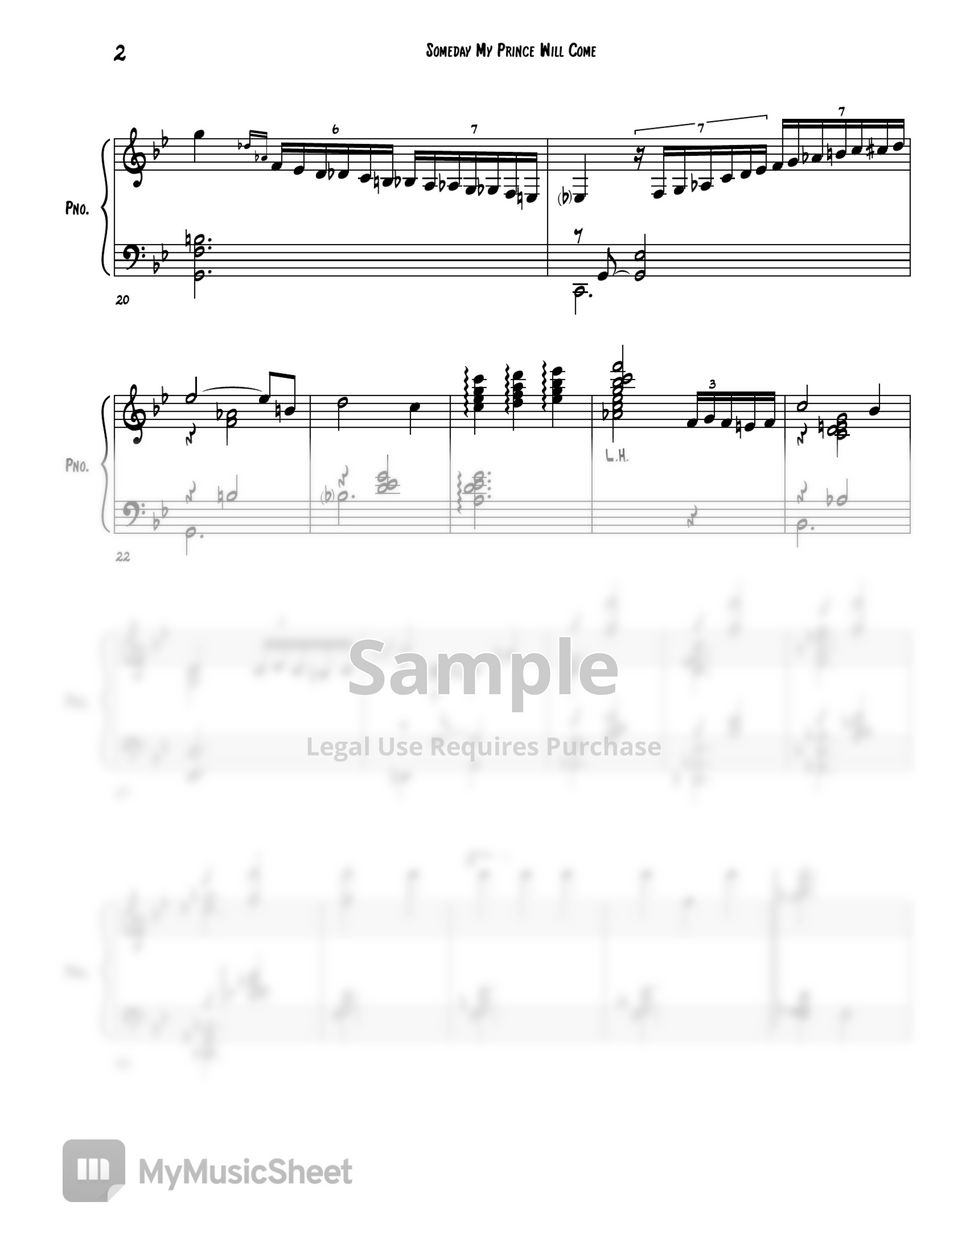 Frank ChurChill - Someday My Prince Will Come (Takashi Matsunaga / piano solo / jazz piano / jazz / いつか王子様が / ジャズ / 坂道のアポロン) by Ko